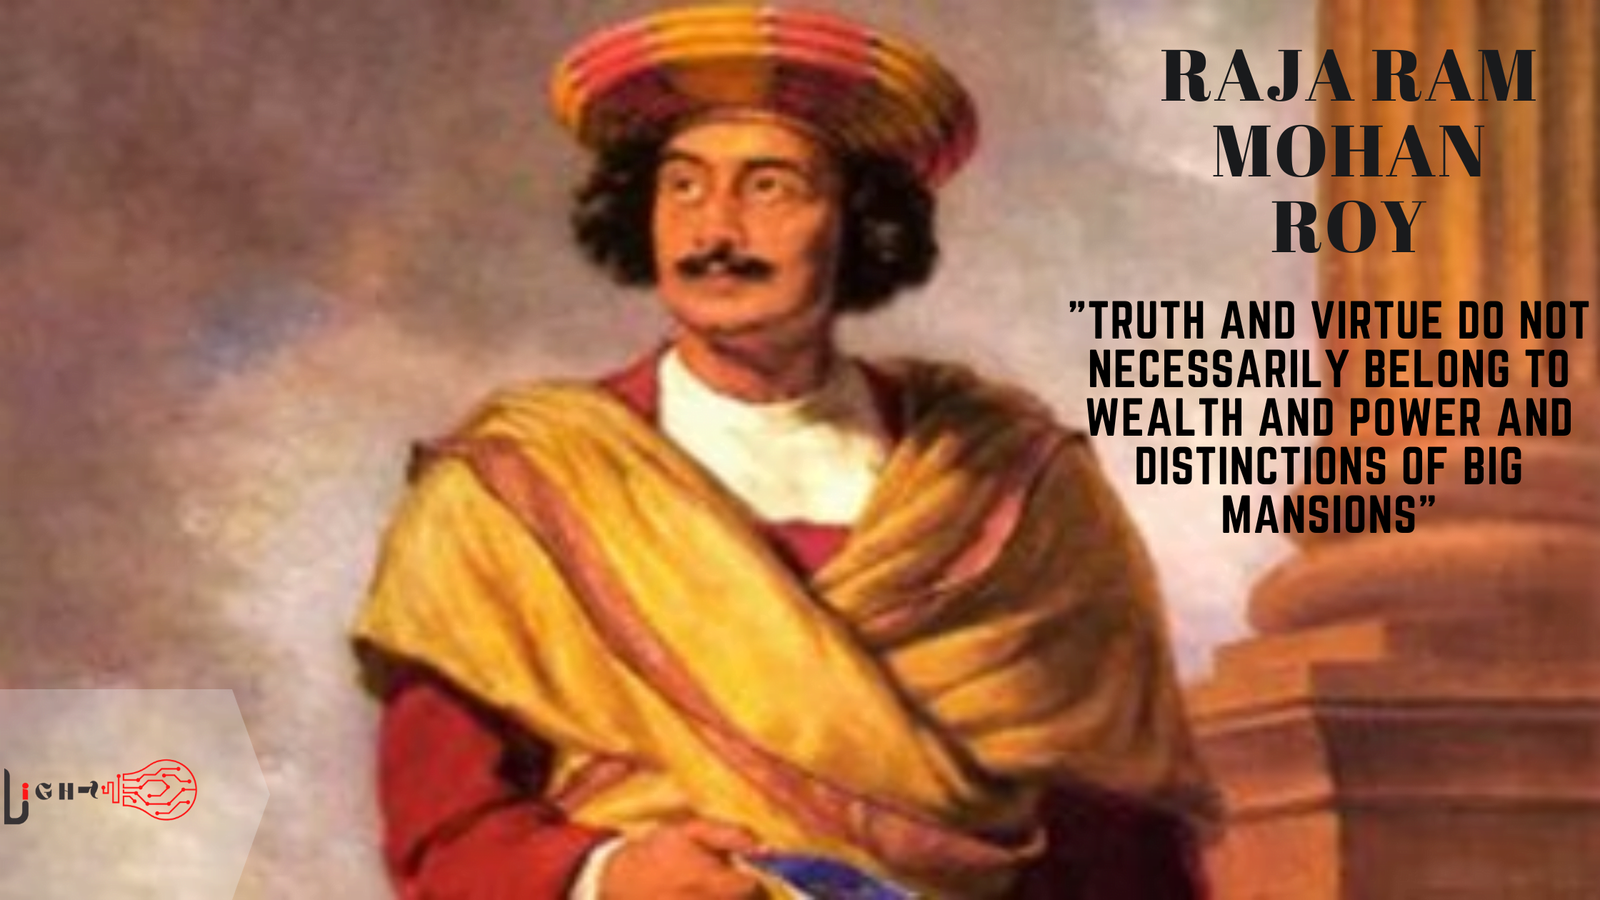 Raja Ram Mohan Roy